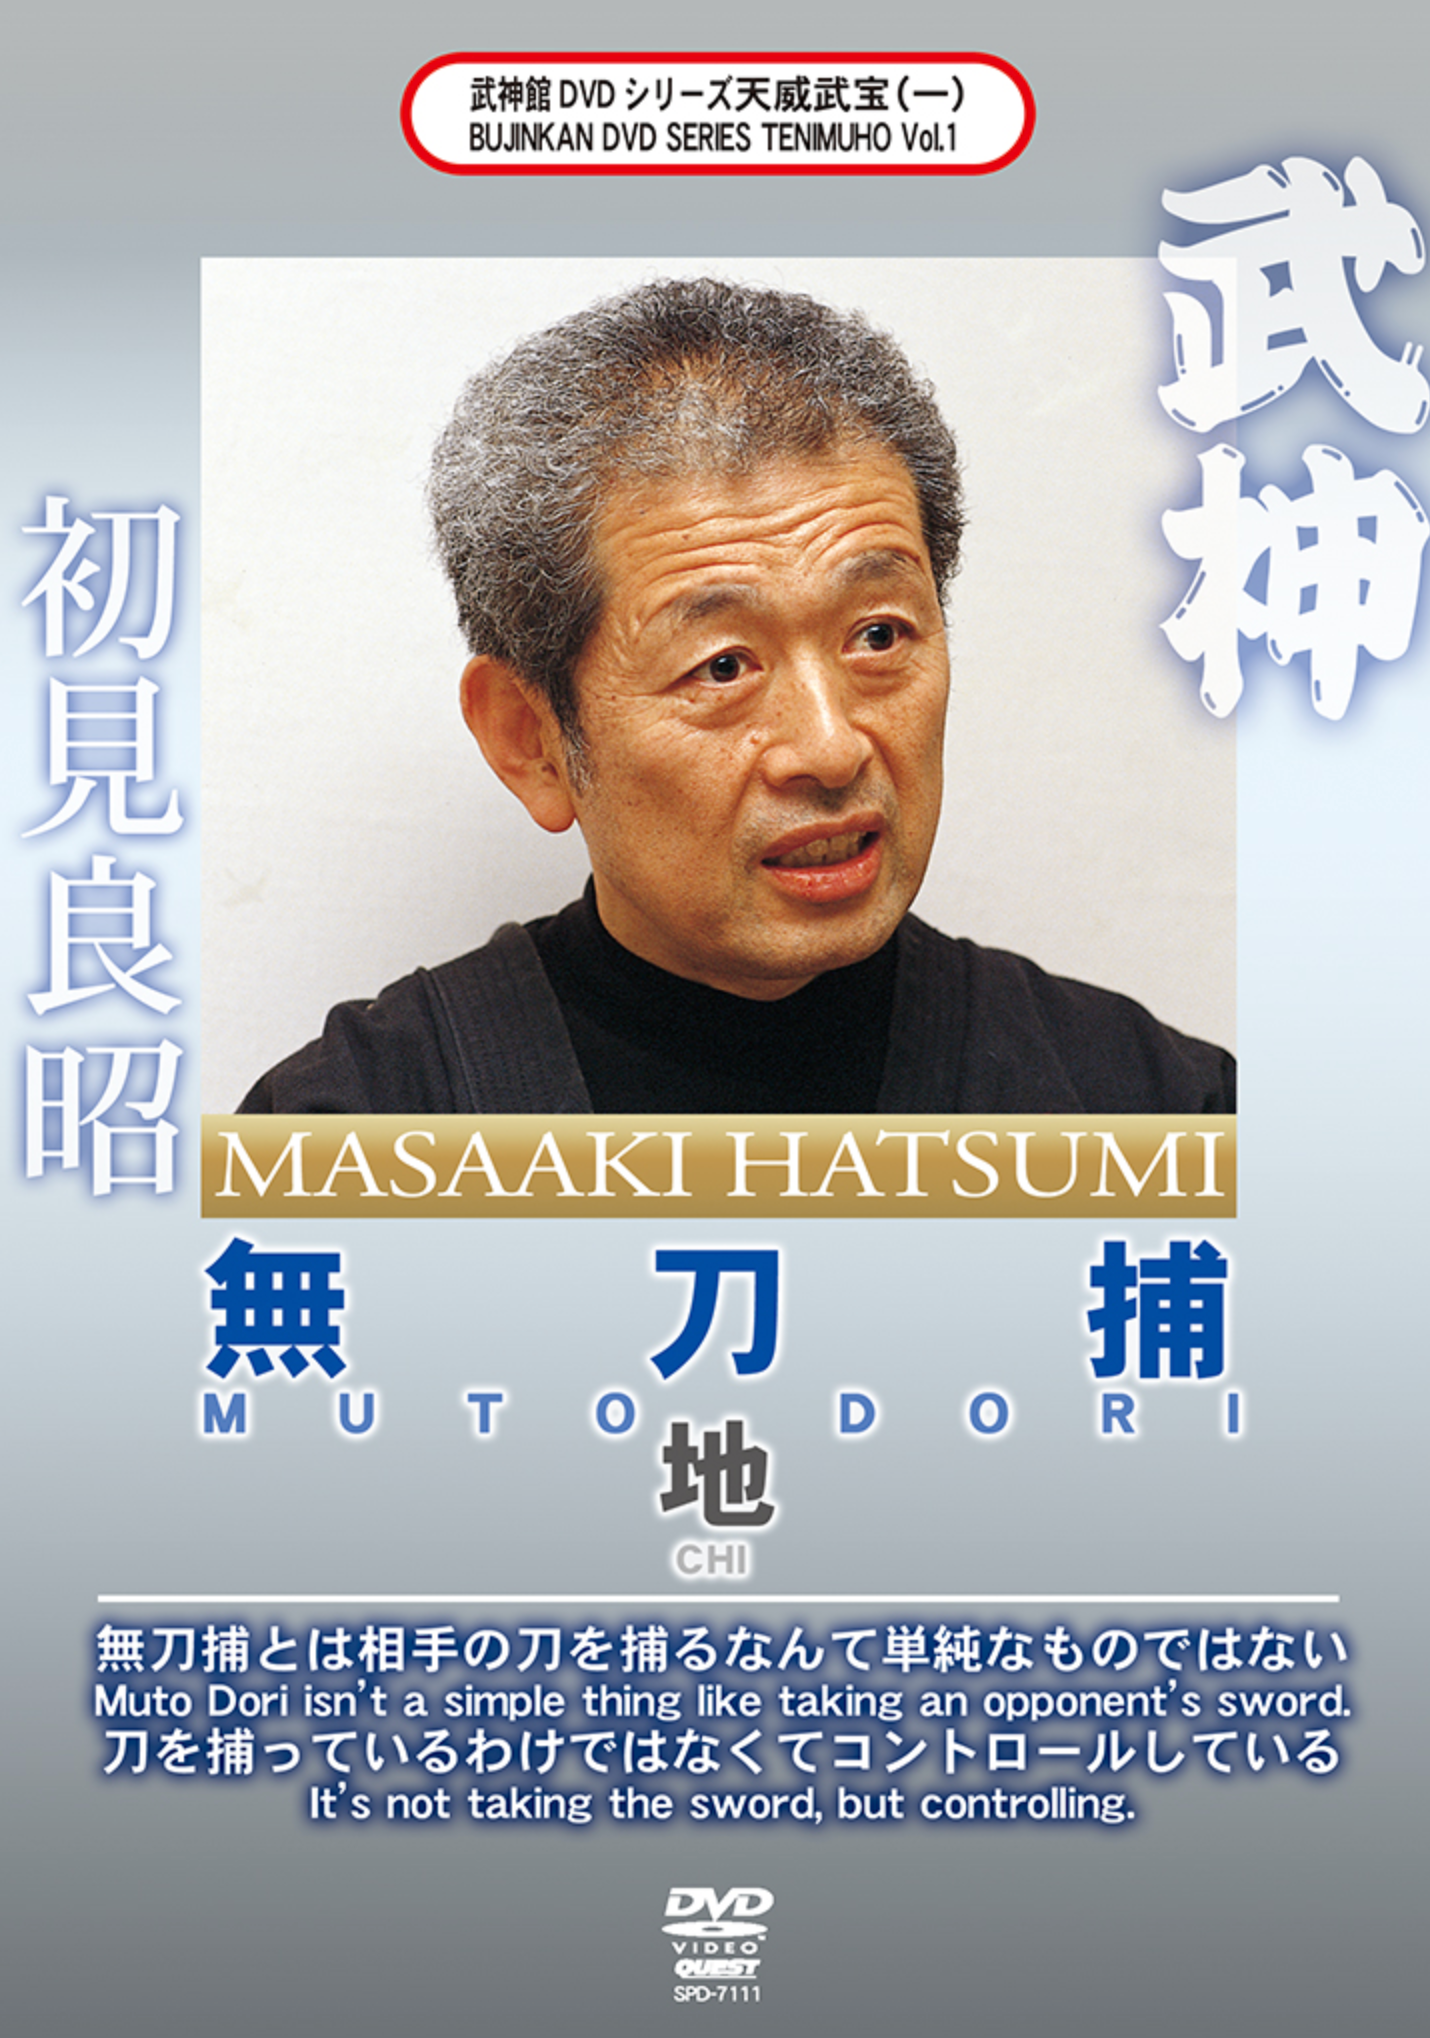 Bujinkan Mutodori Chi DVD with Masaaki Hatsumi - Budovideos Inc